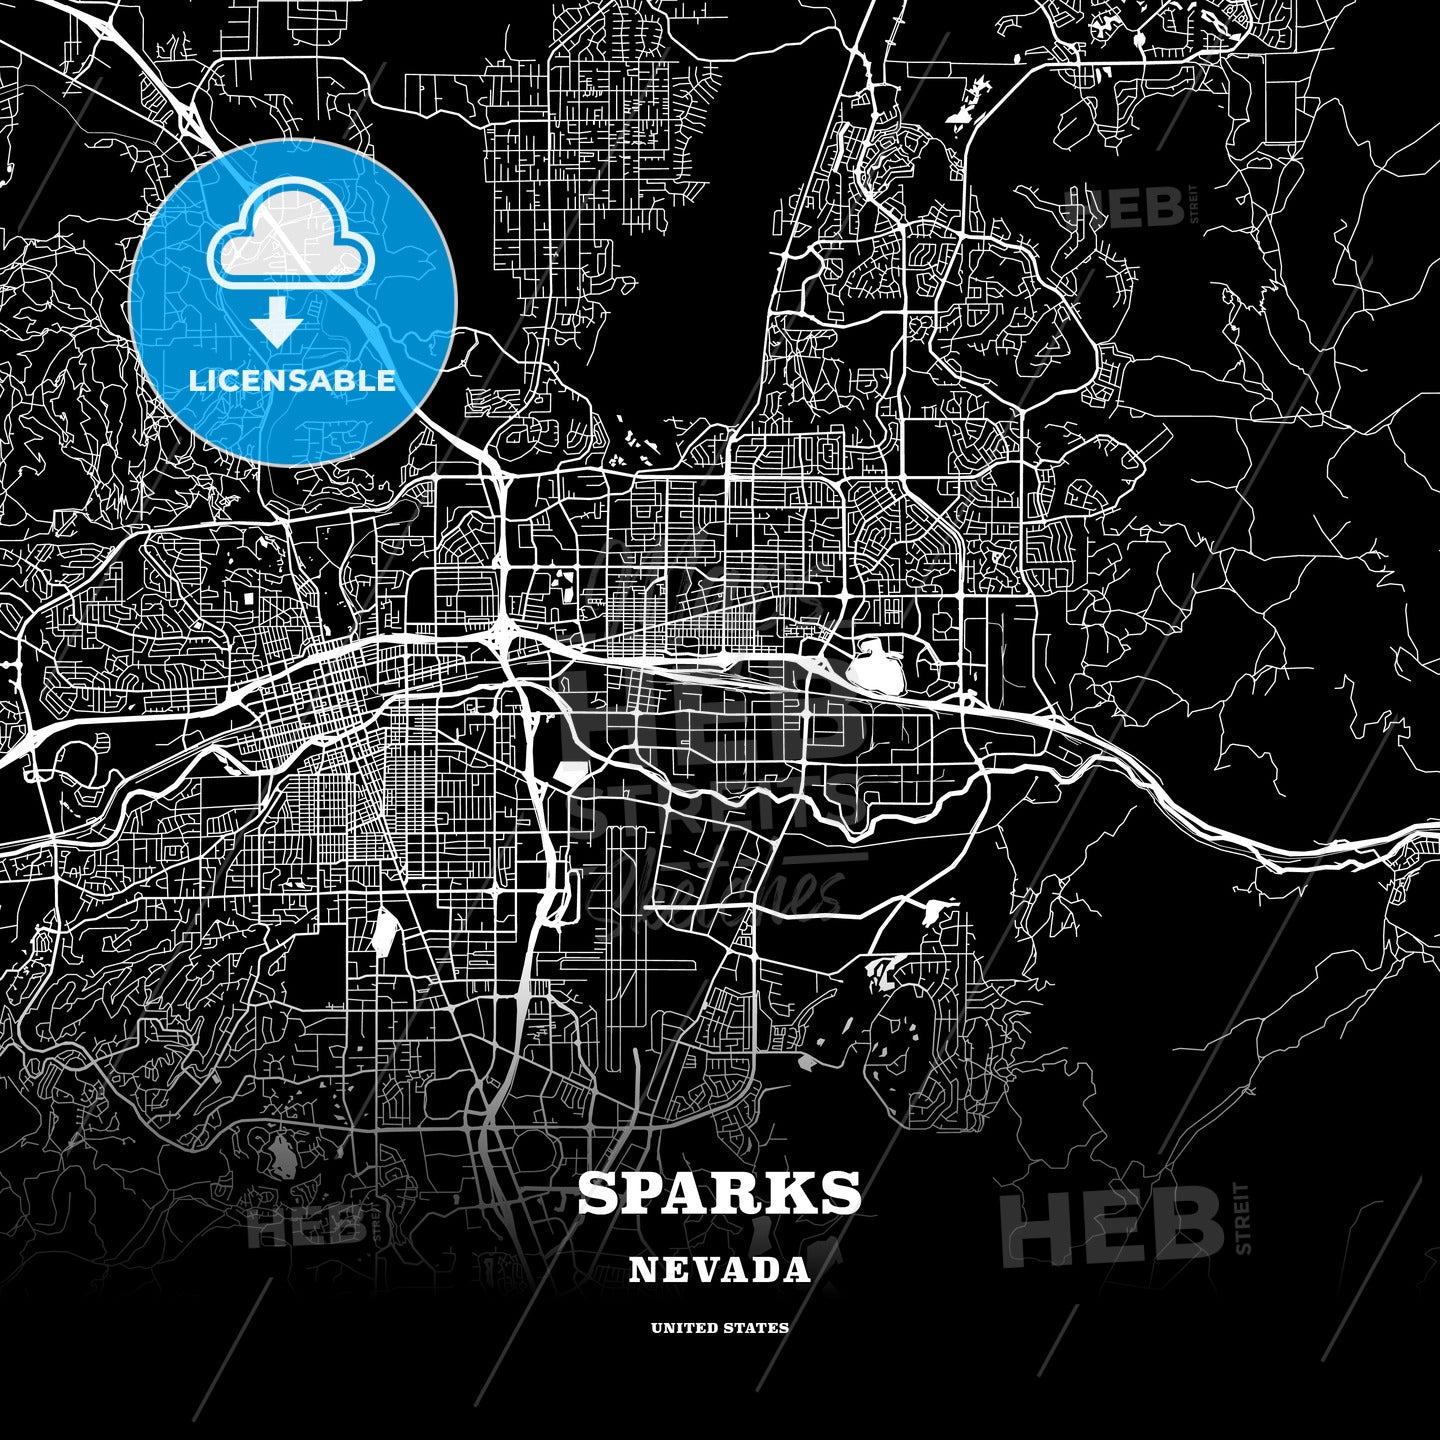 Sparks, Nevada, USA map